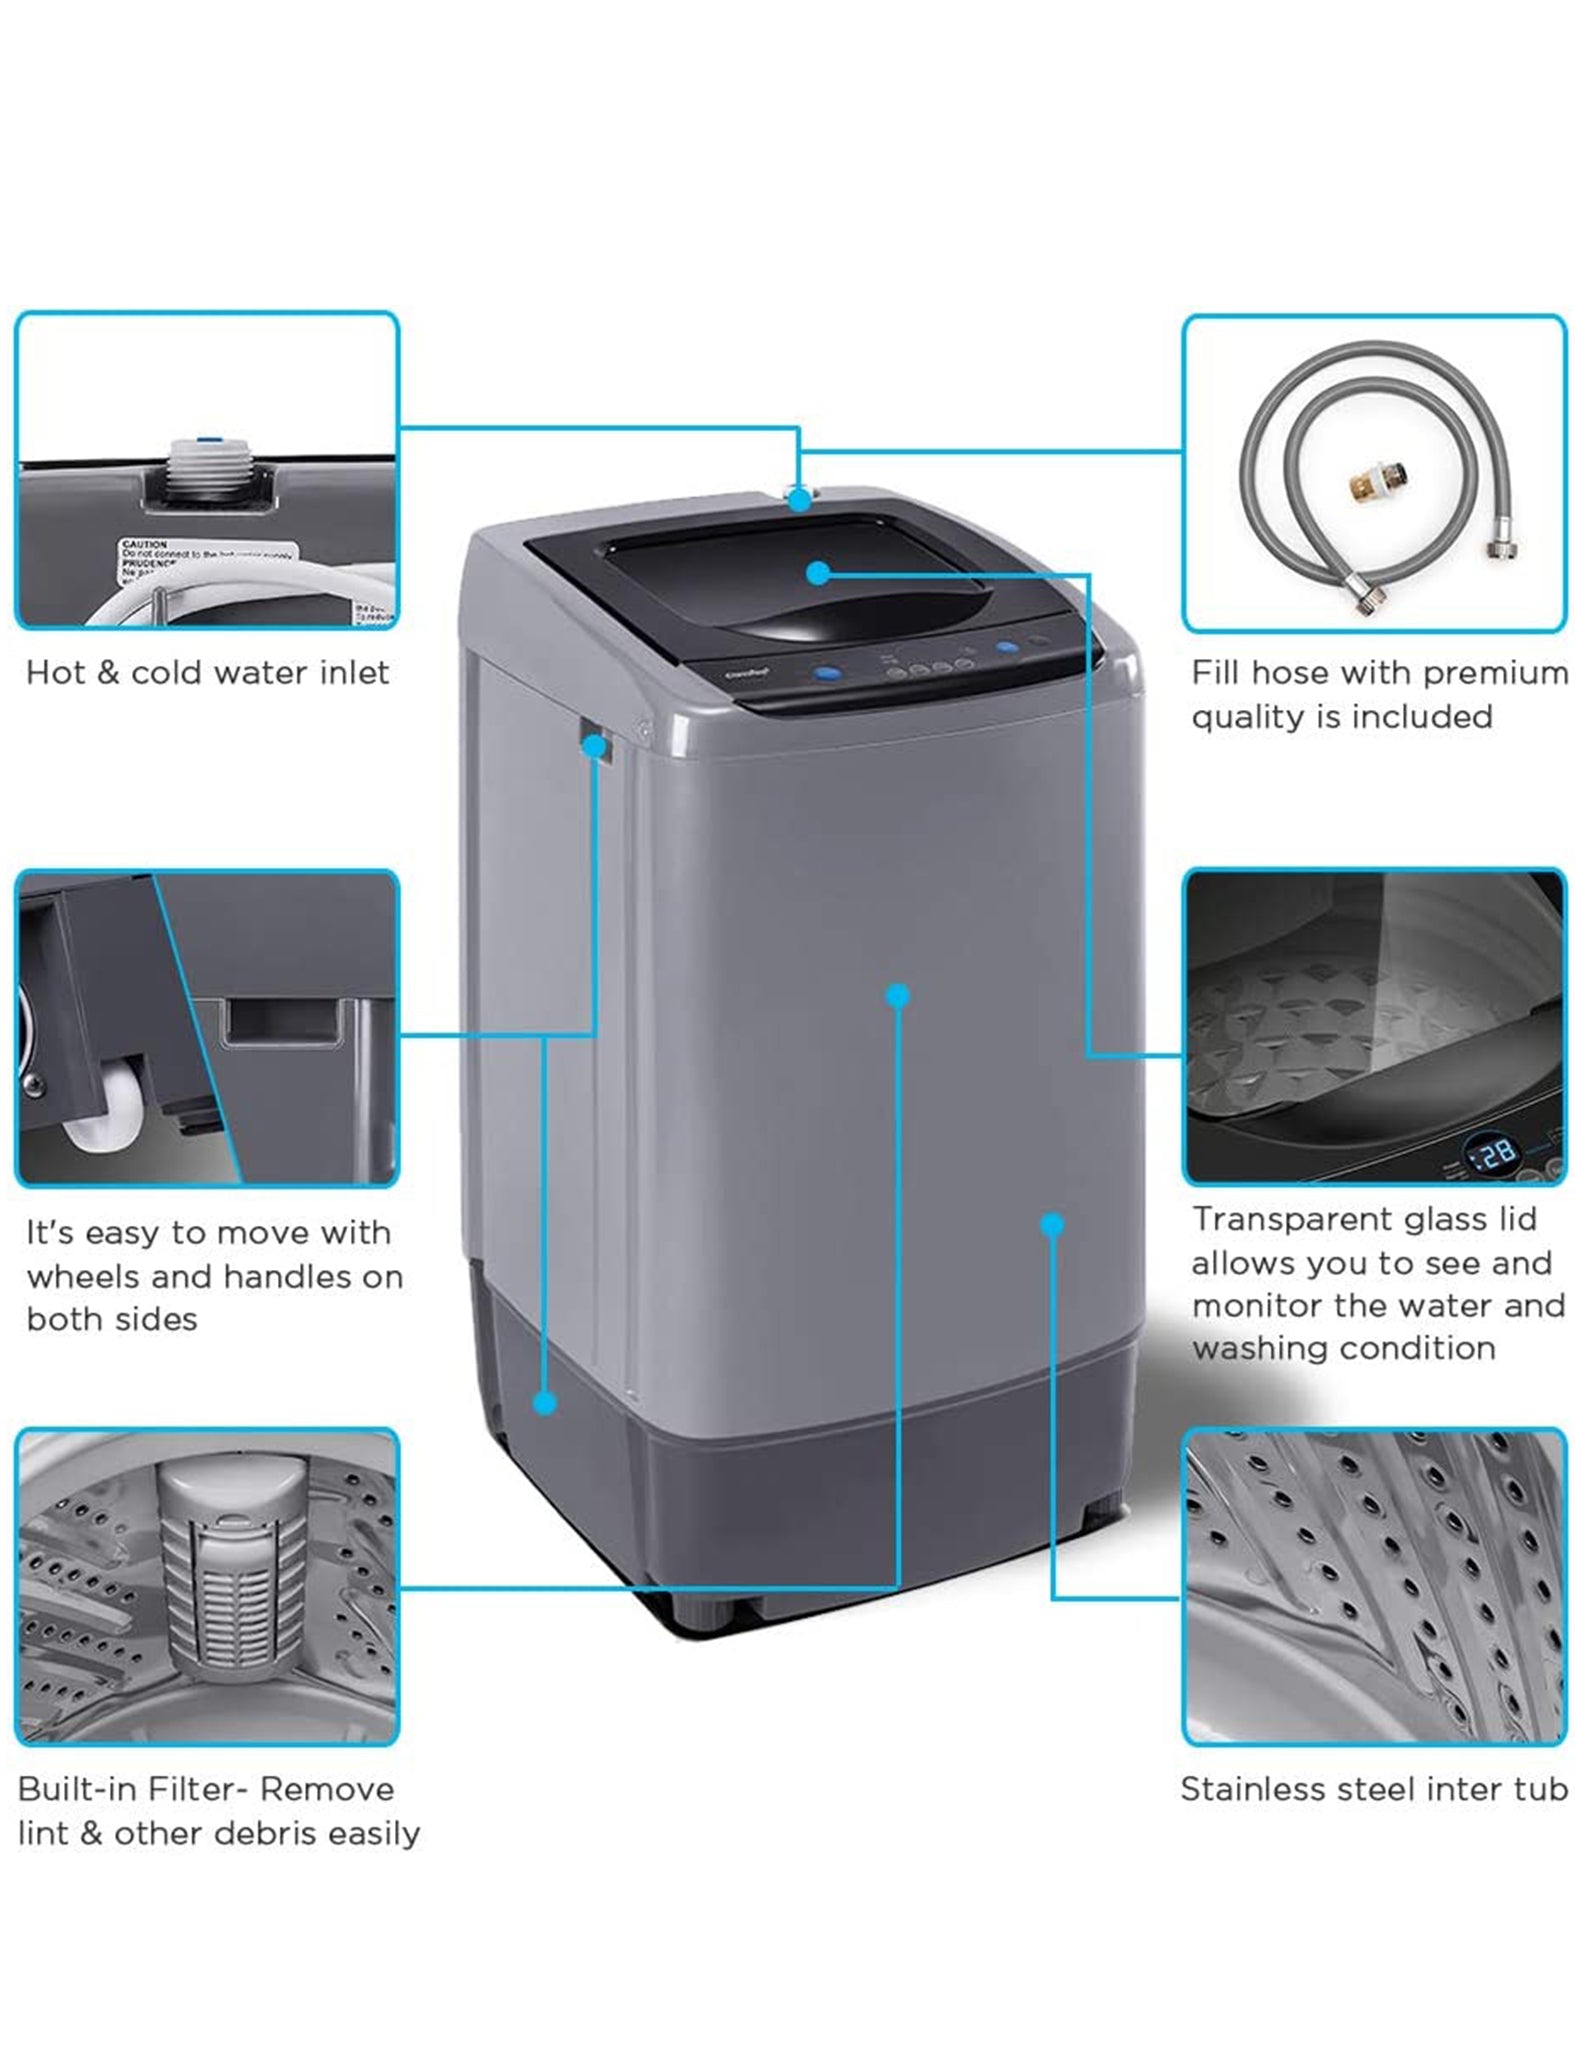 COMFEE' Washing Machine 2.4 Cu.ft LED Portable Washing Machine and